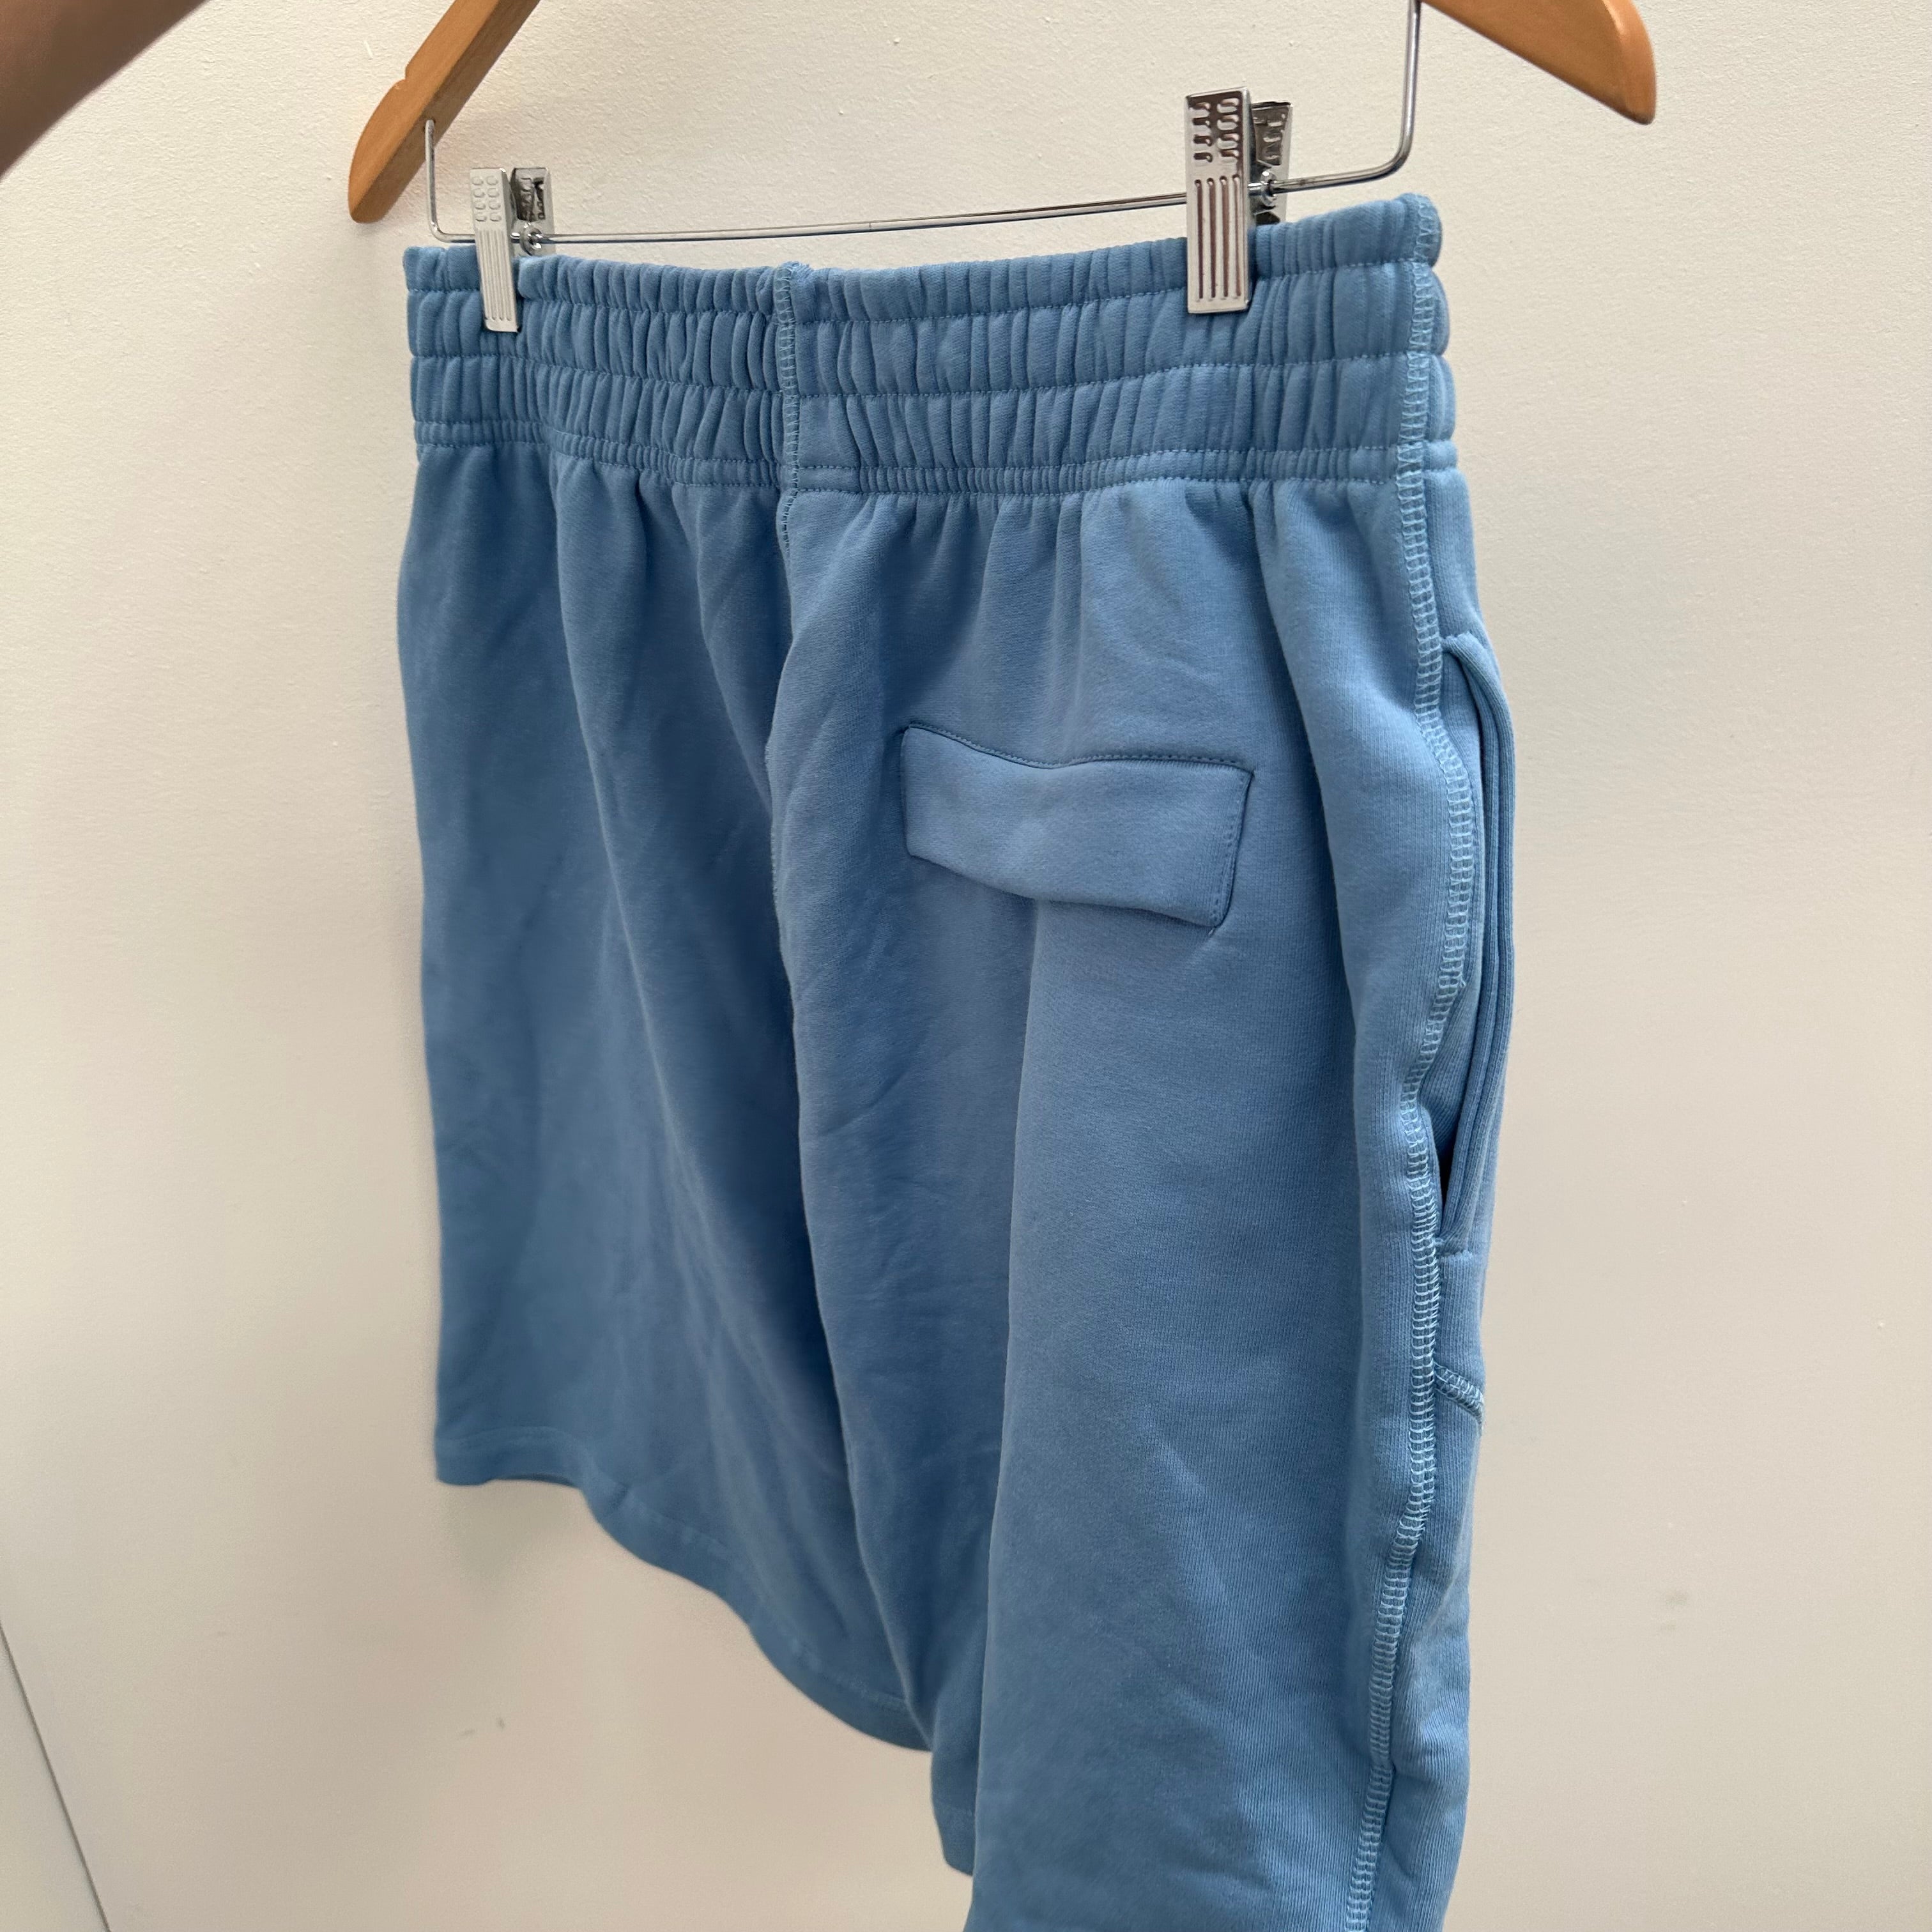 Corteiz Property of Corteiz Shorts Blue (Size L)